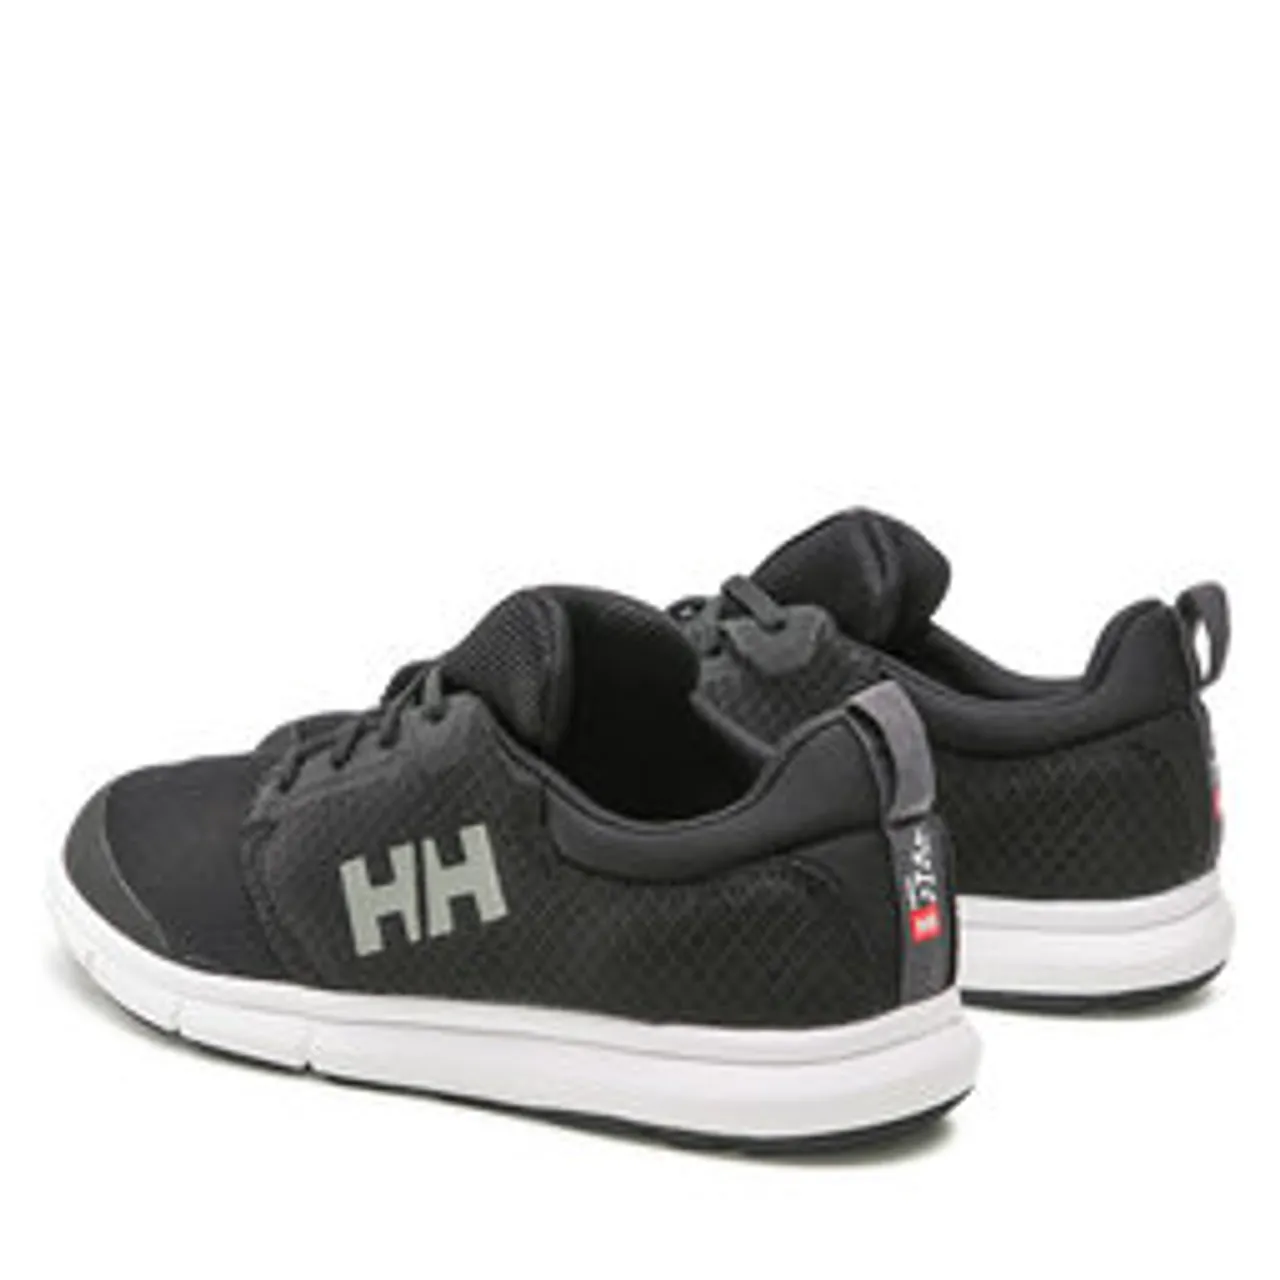 Schuhe Helly Hansen Freathering 11572_990 Black/White